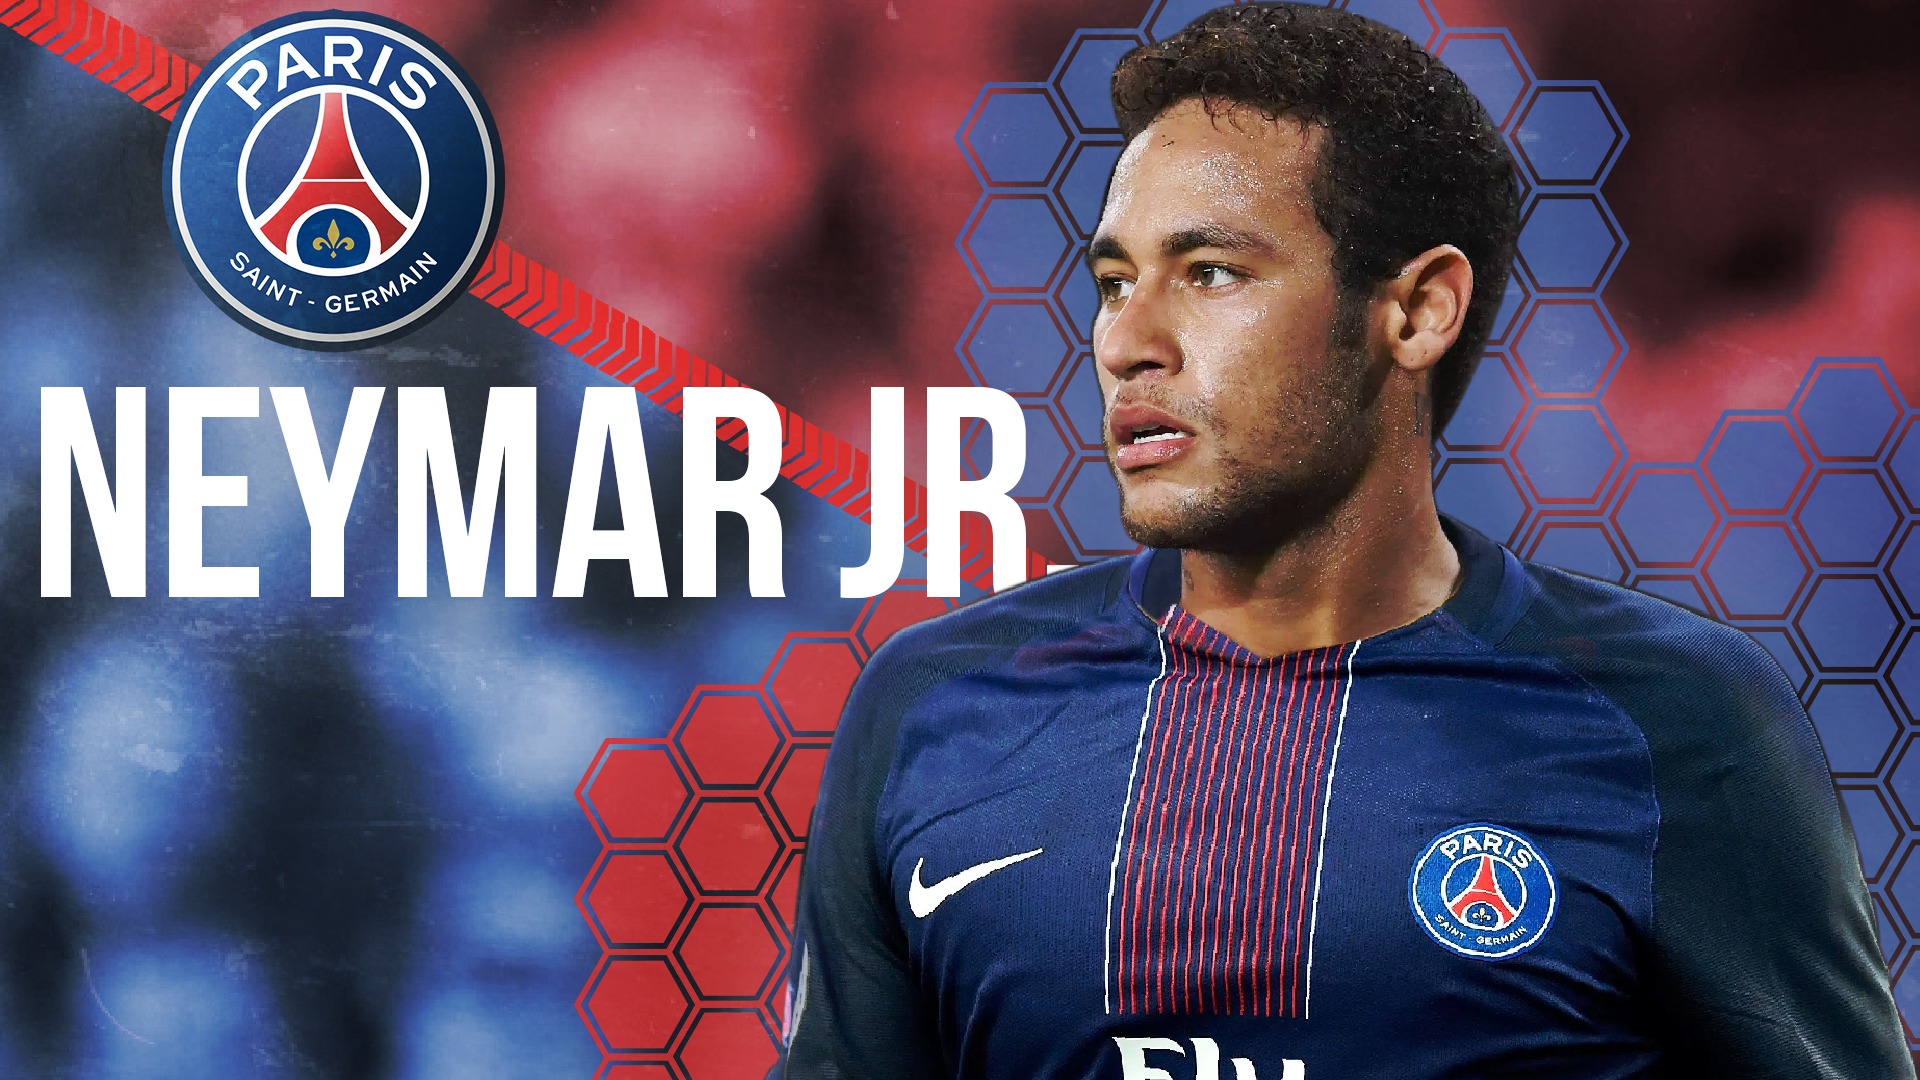 Neymar JR Paris Saint Germain by yusufdawfydd on DeviantArt